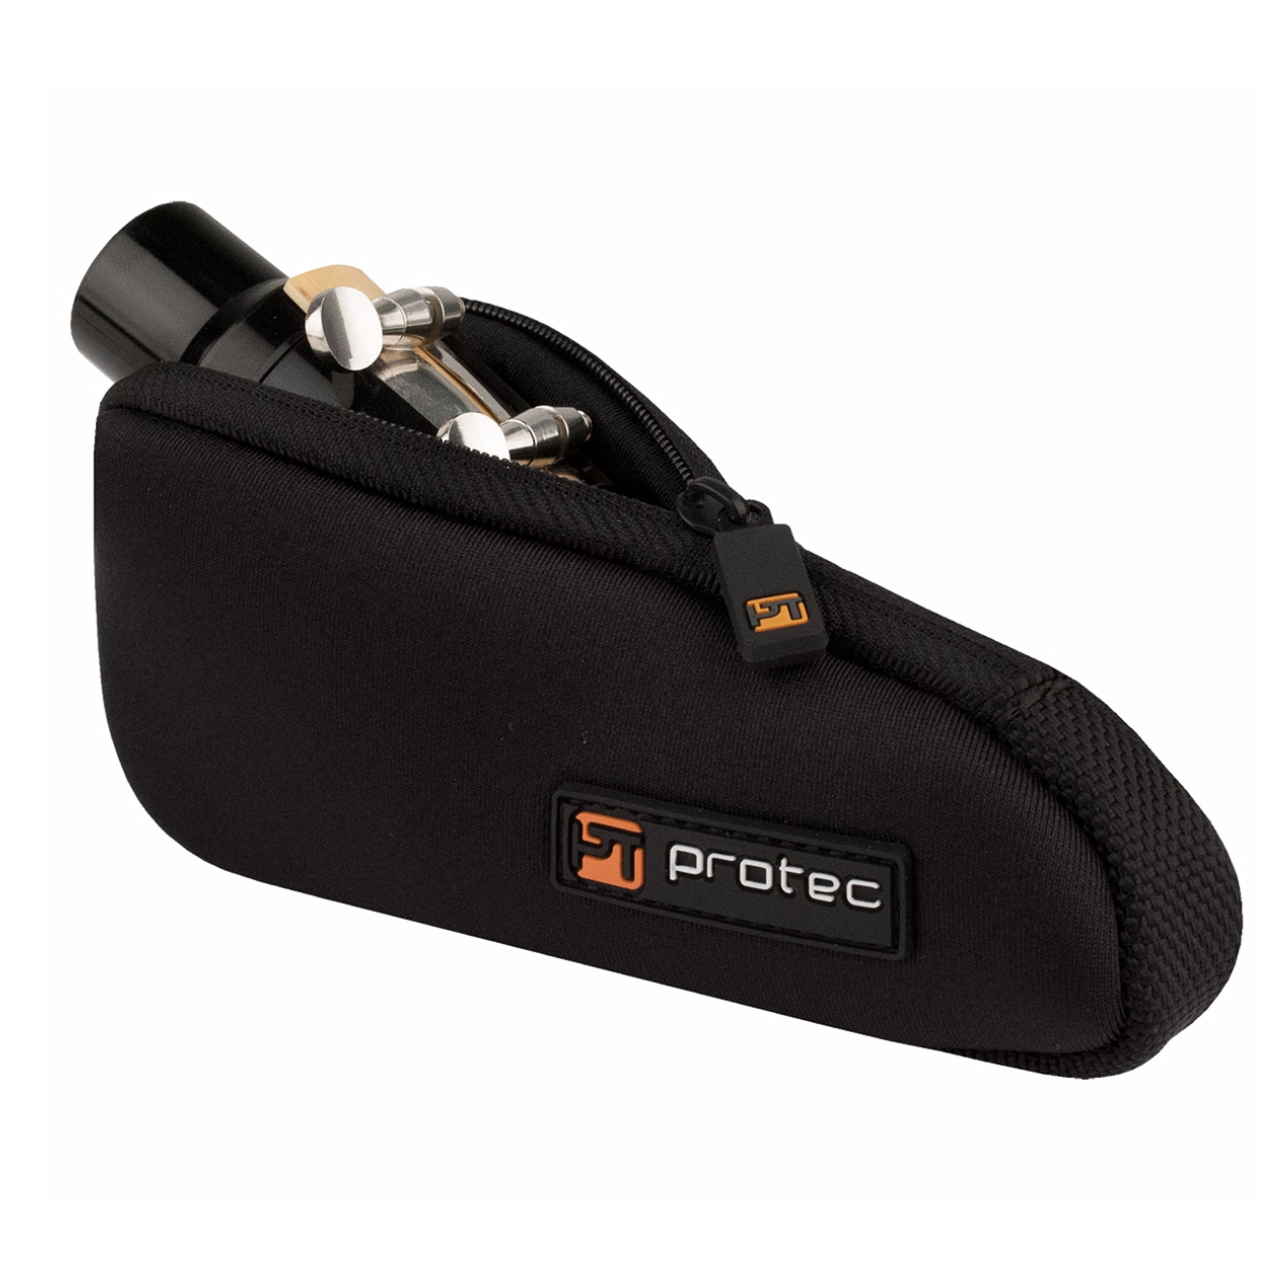 Protec - Single Neoprene Mouthpiece Pouch (for Tuba/Tenor Saxophone)-Accessories-Protec-Black-Music Elements